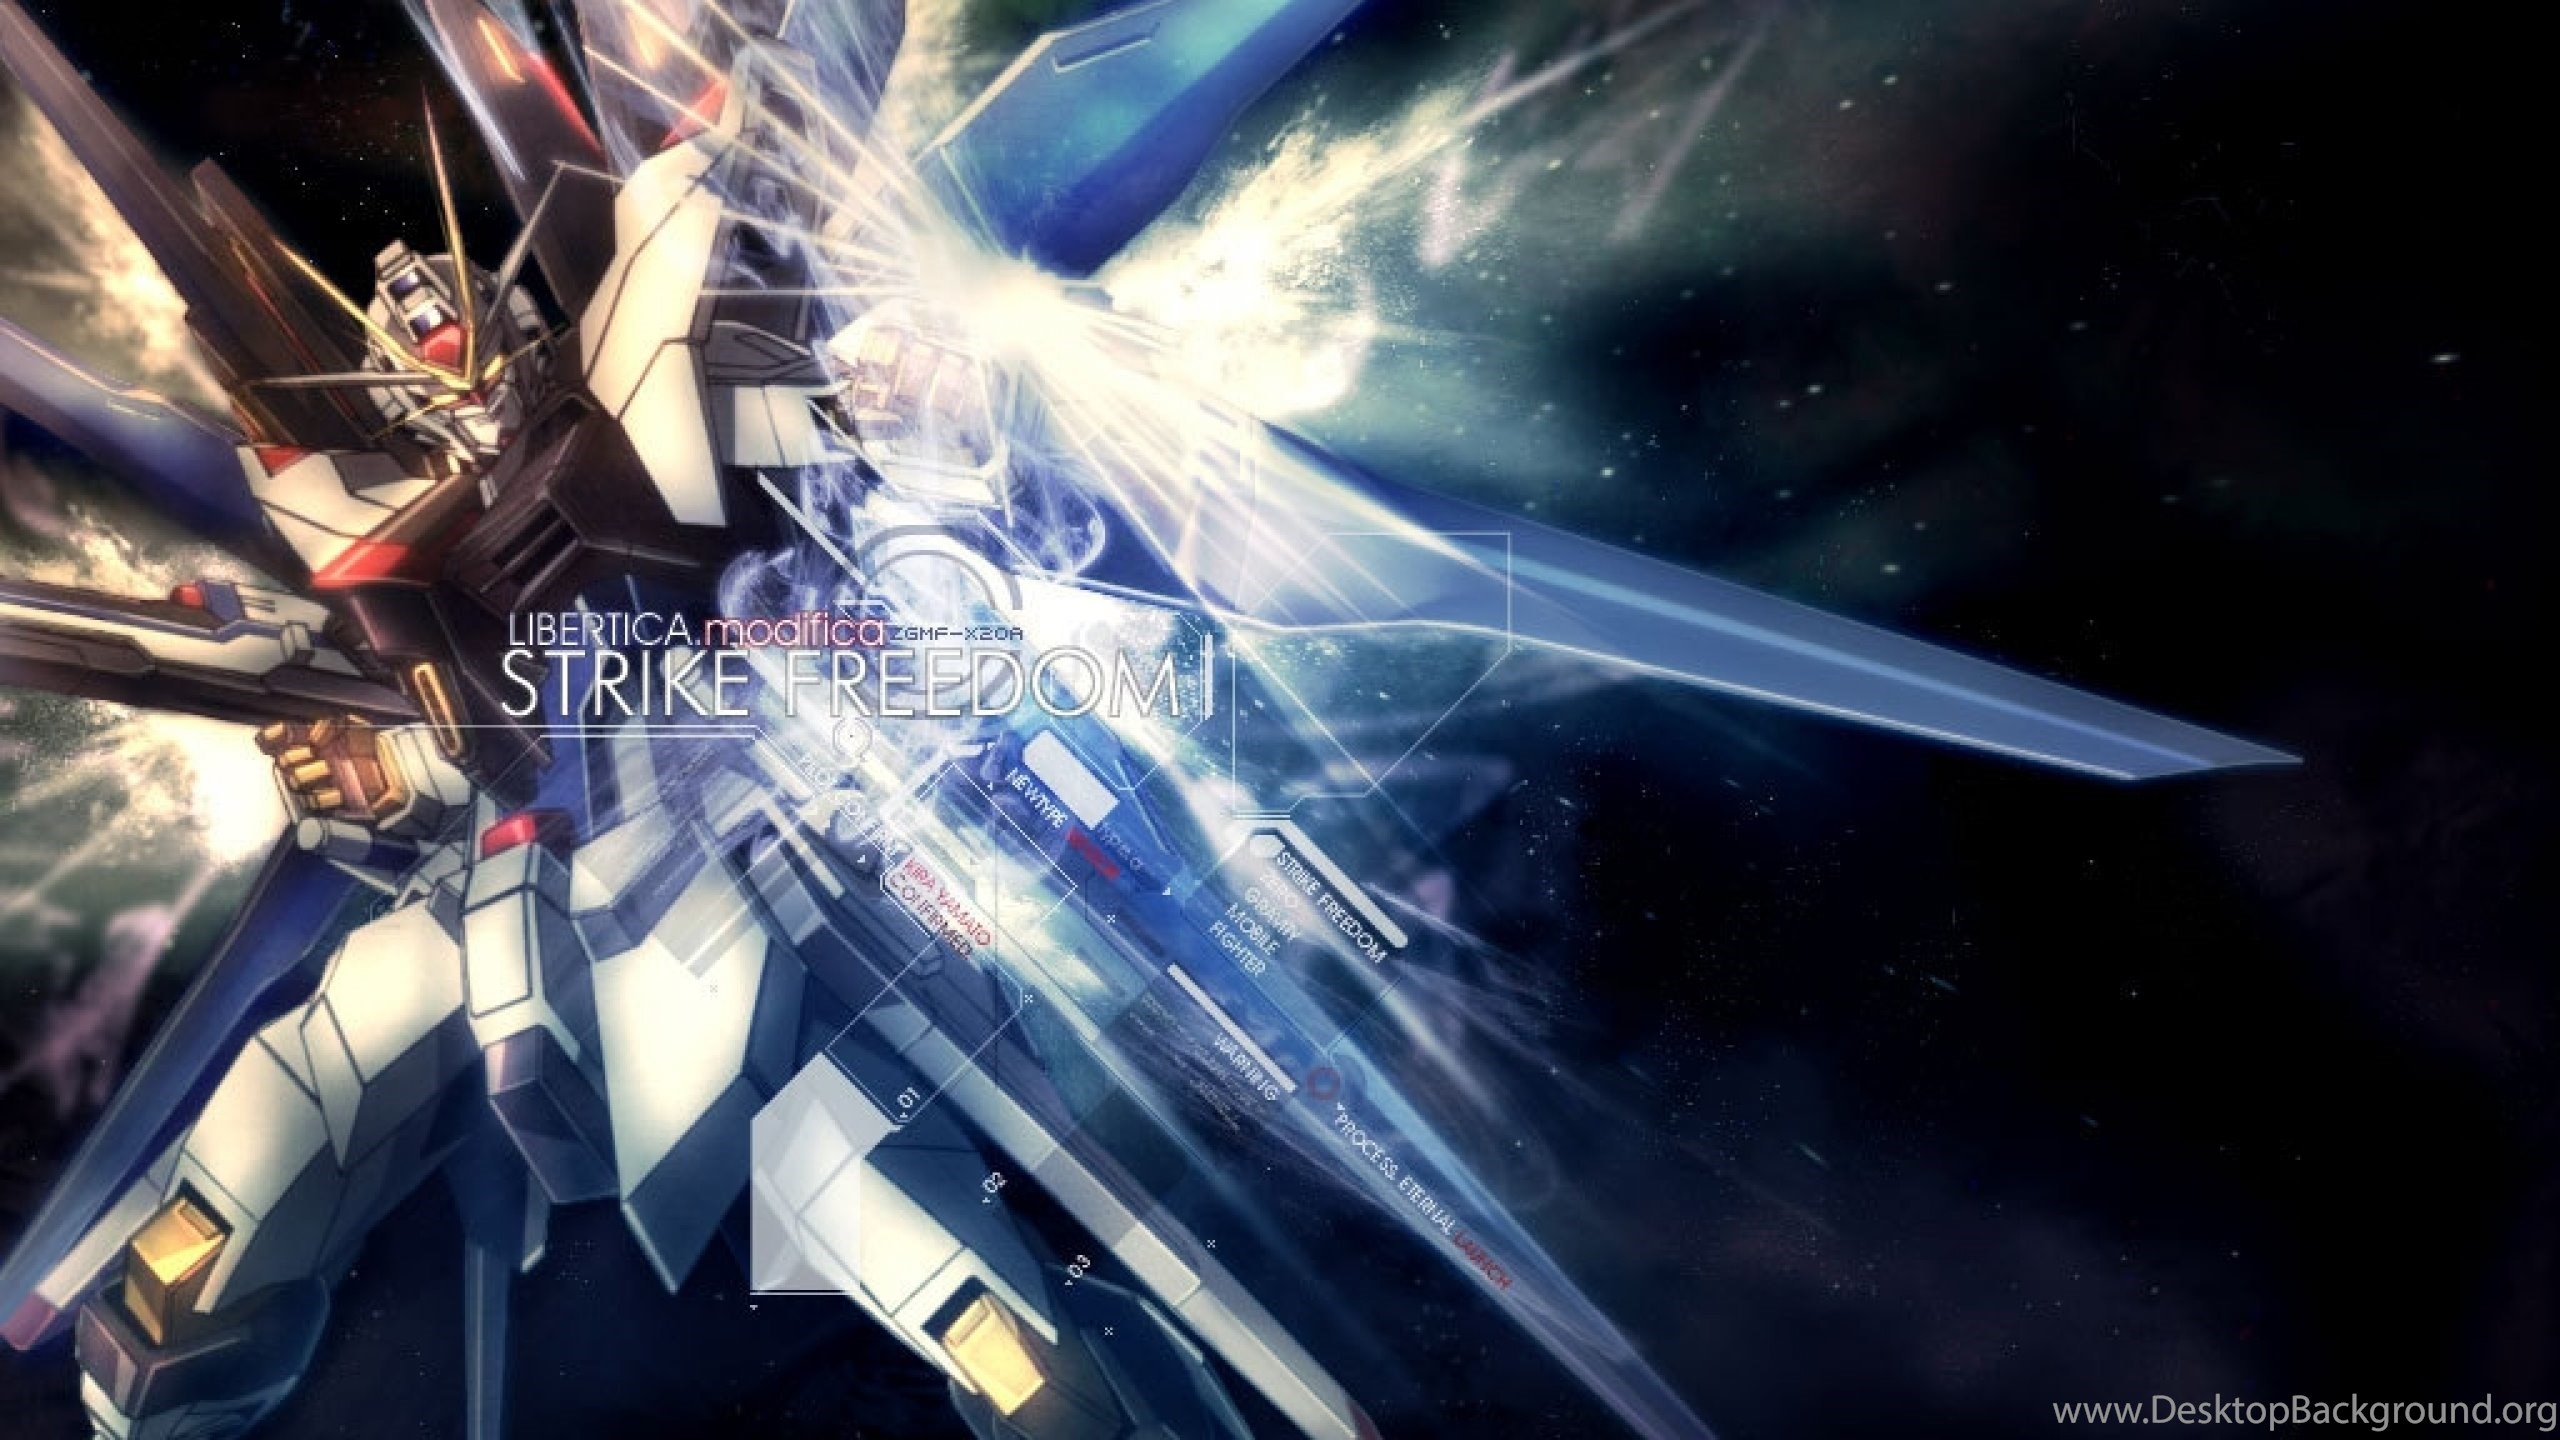 Download Wallpapers Download 2560x1600 Freedom Gundam Strike Desktop Background